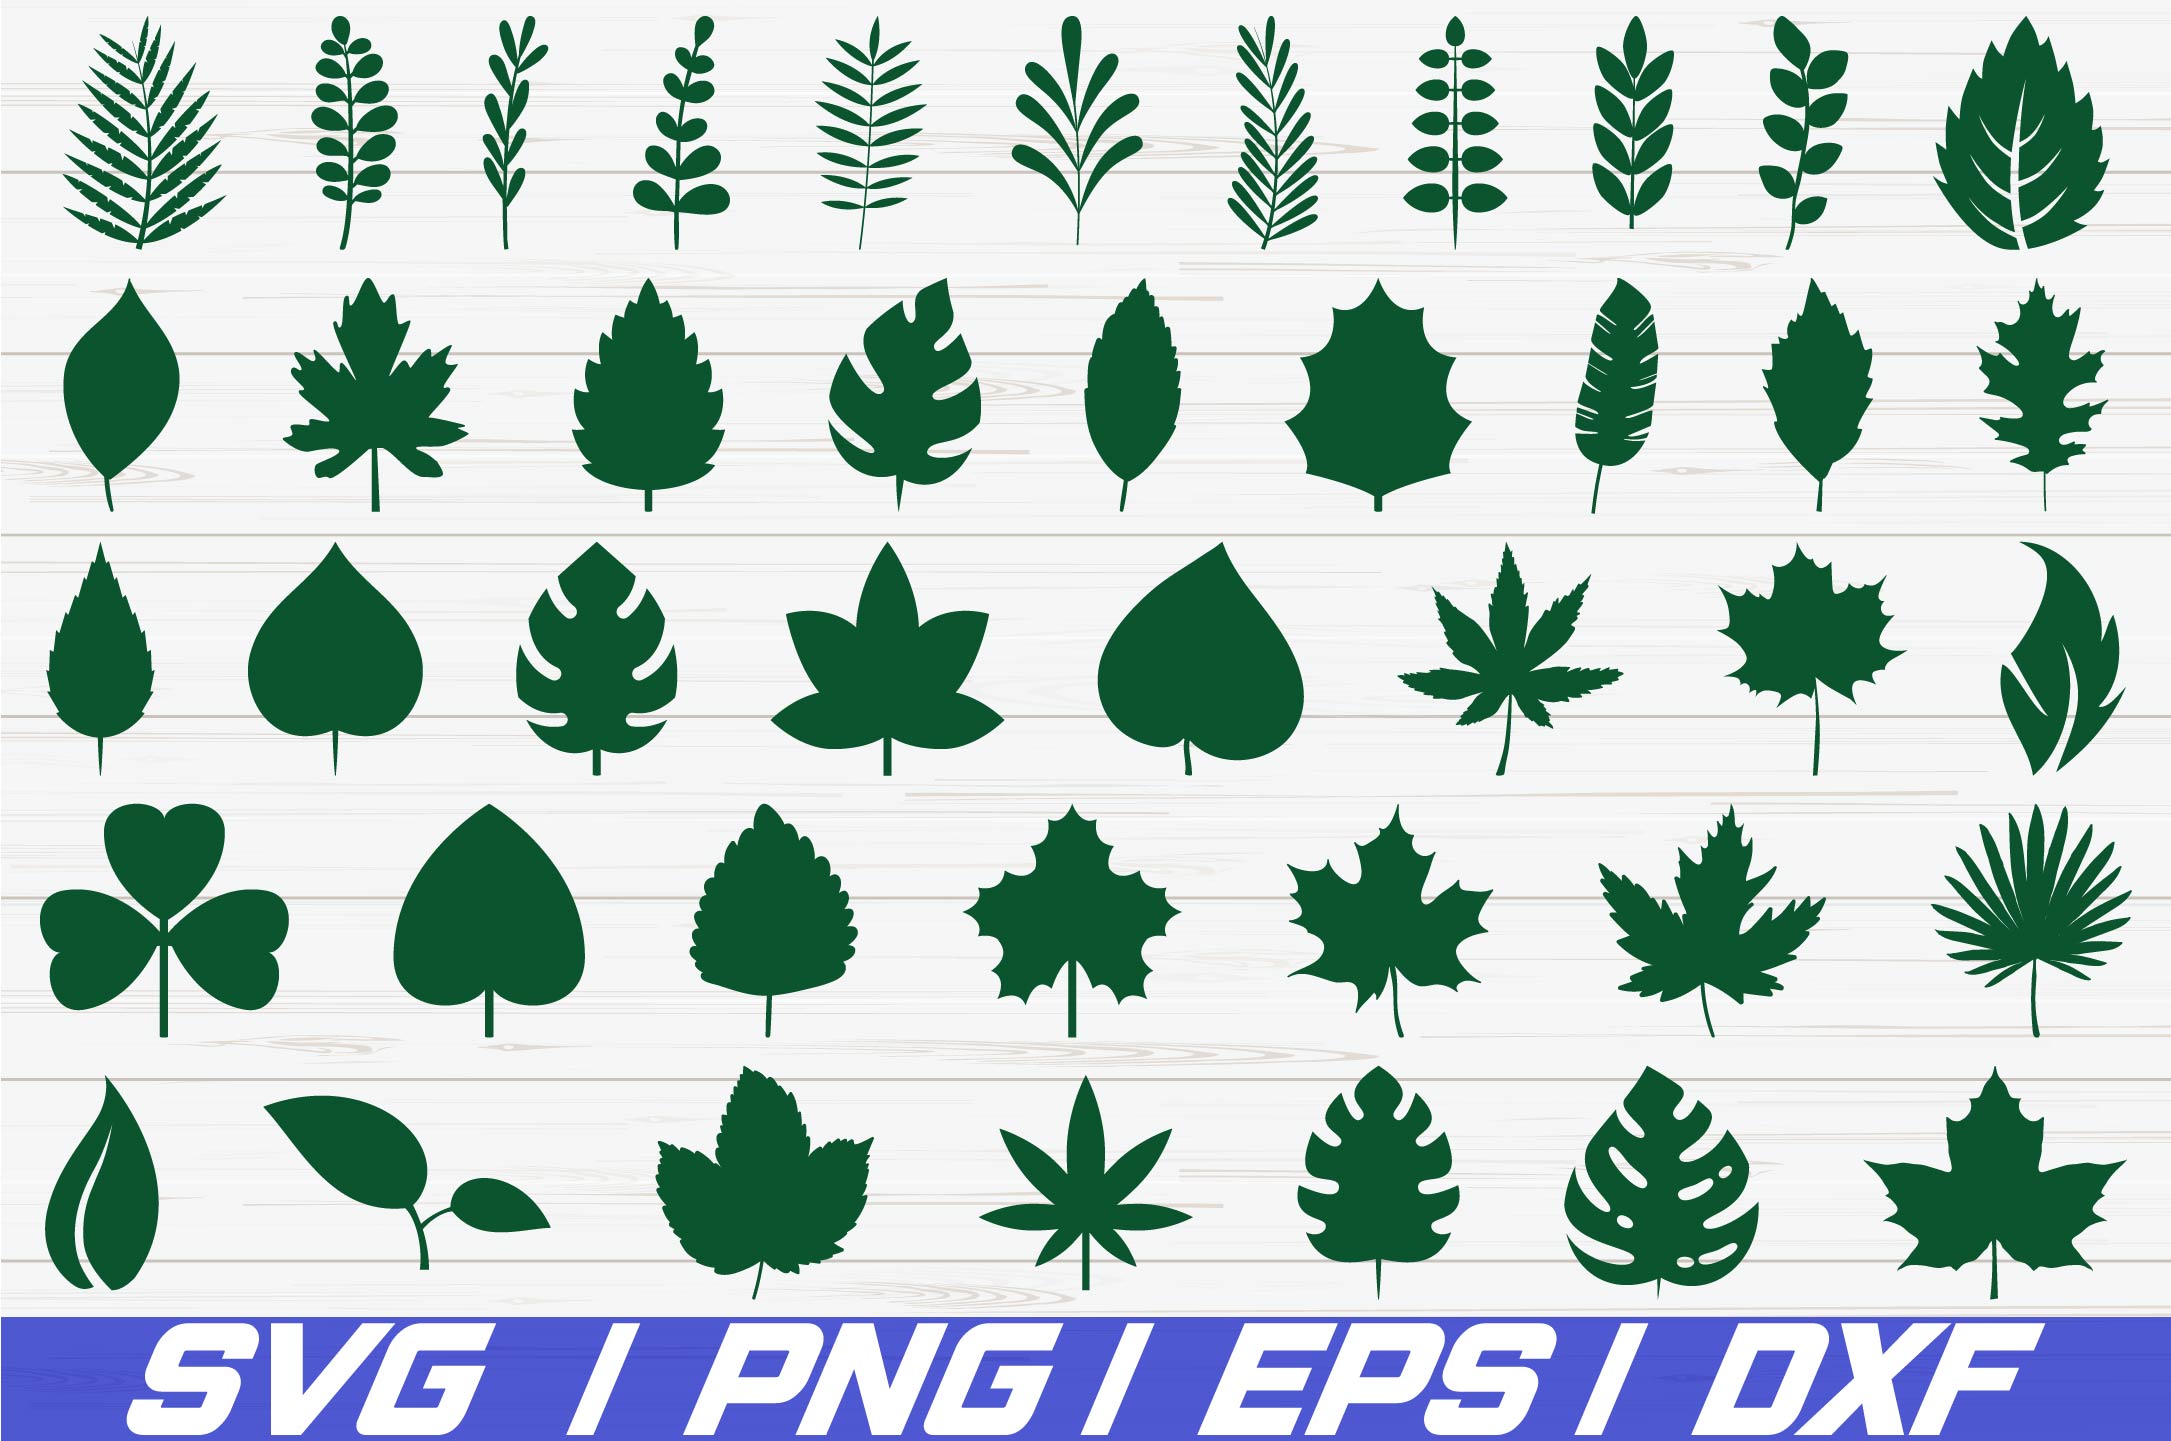 42 Paper Leaves / SVG / Cut File / Leaf Templates / Cricut